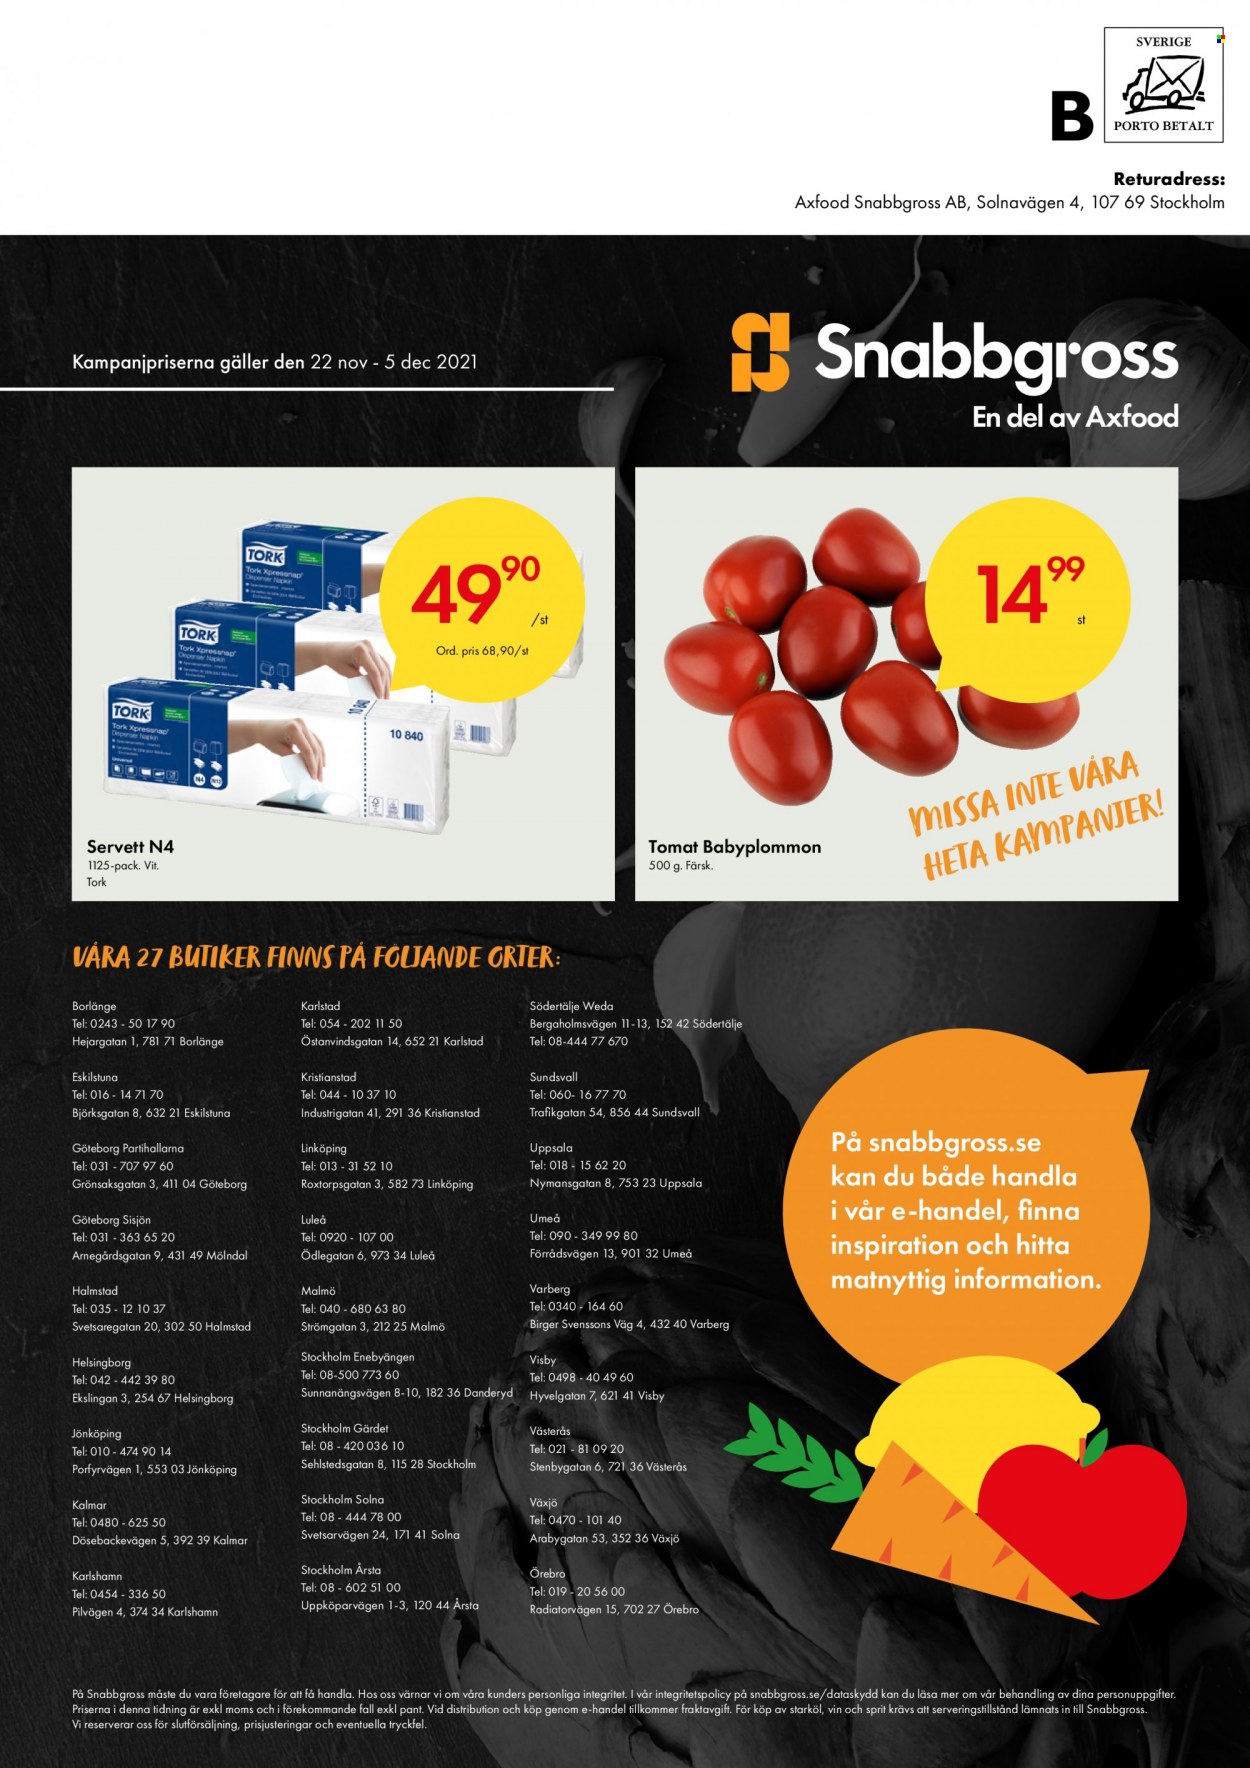 Axfood Snabbgross reklamblad - 22/11 2021 - 5/12 2021.